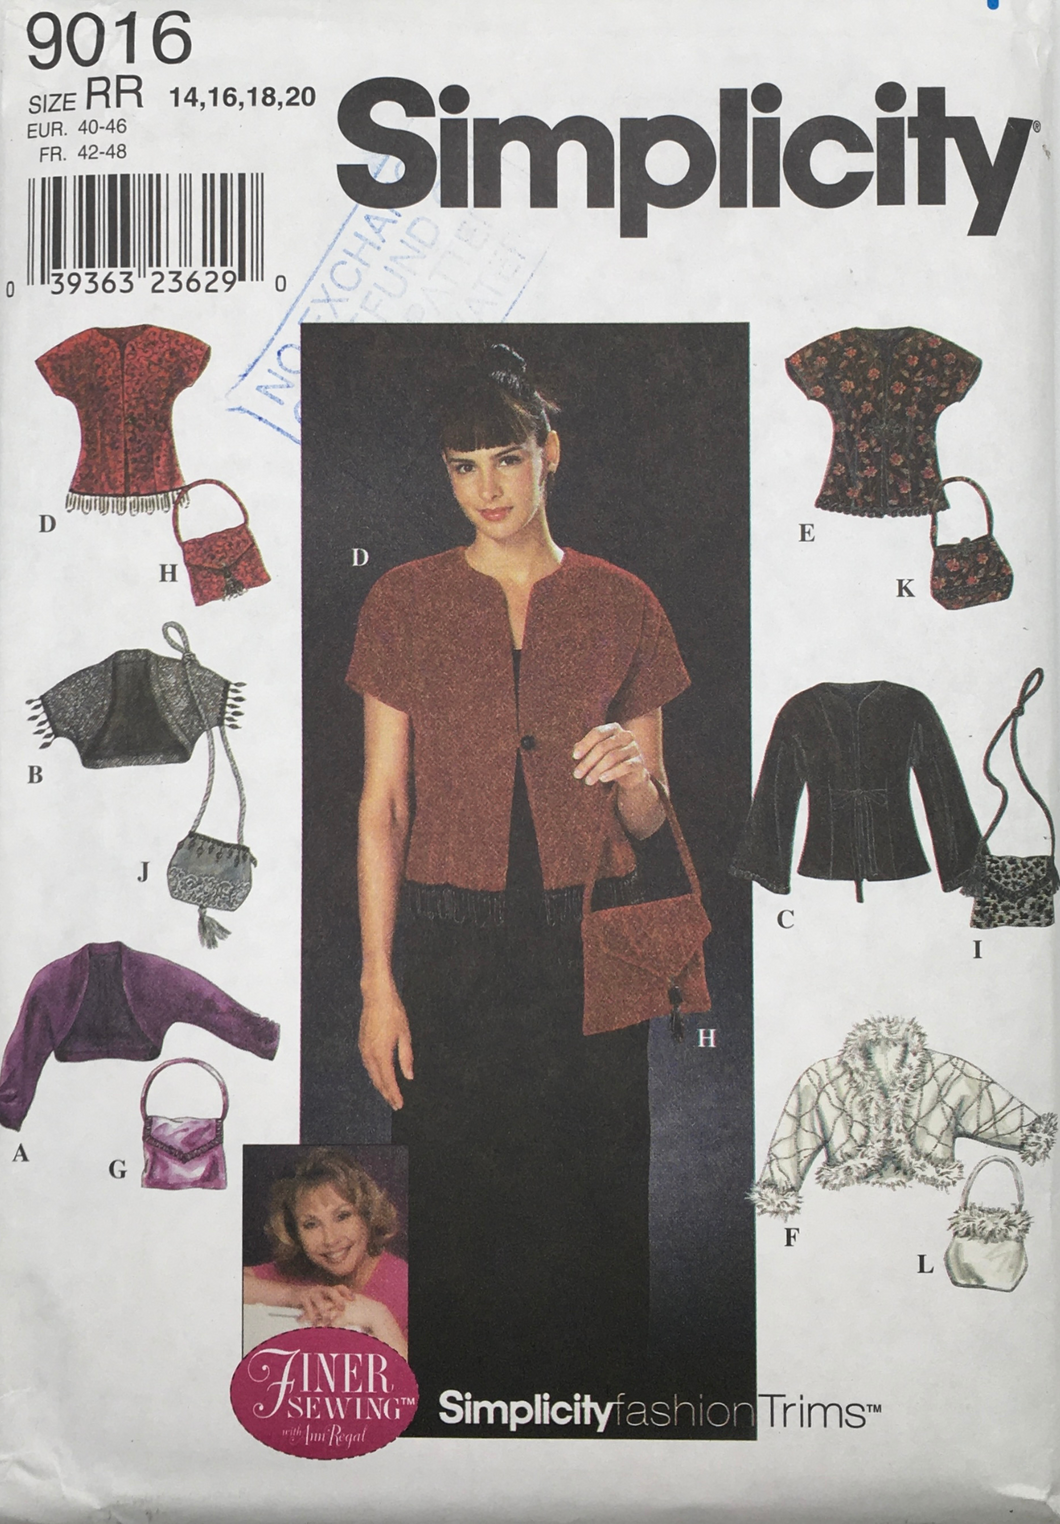 1999 Vintage Sewing Pattern: Simplicity 9016